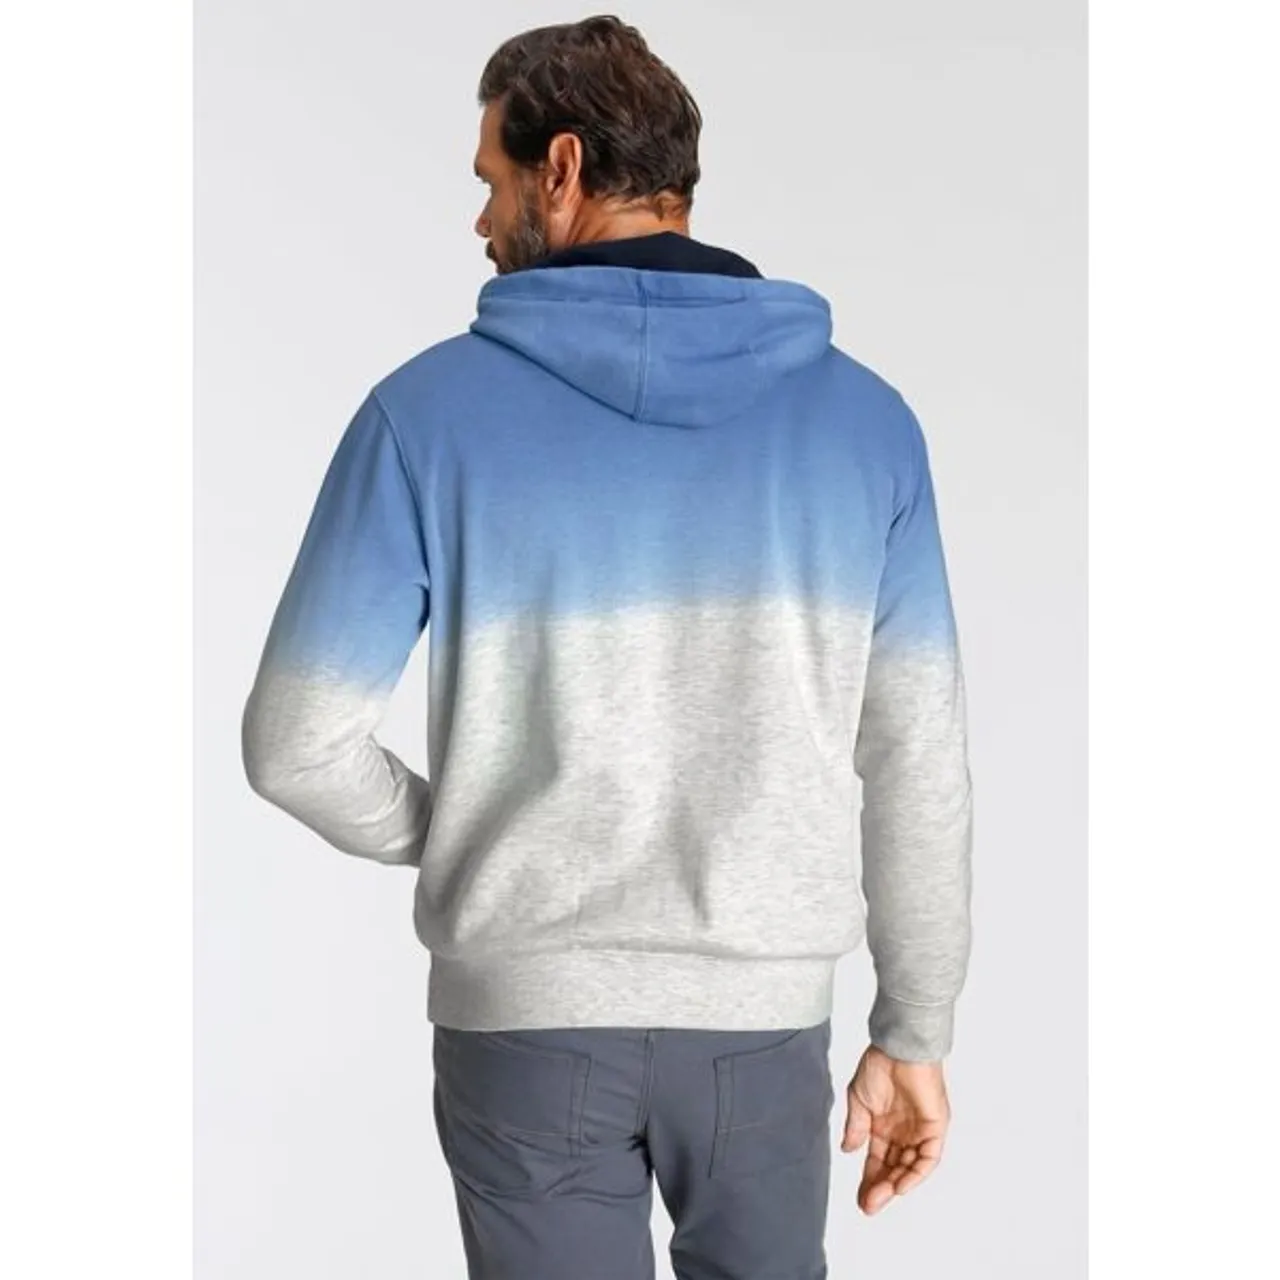 Kapuzensweatshirt ARIZONA Gr. M (48/50), bunt (grau, meliert, blau) Herren Sweatshirts